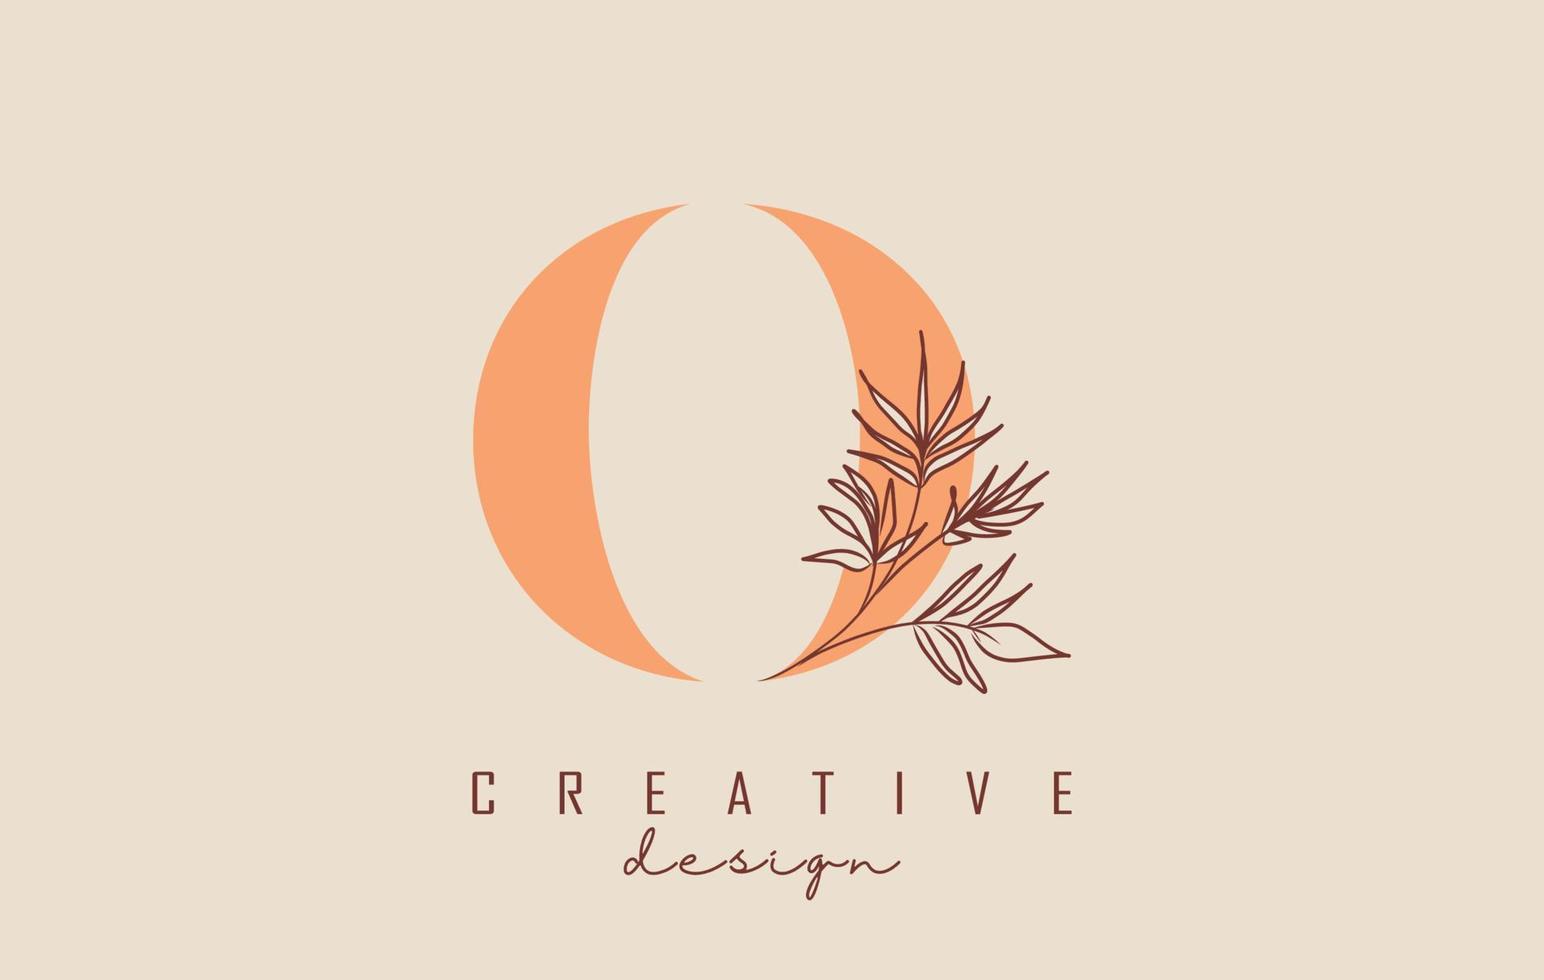 Orange shade O letter logo design with branch of leaves vector illustration.